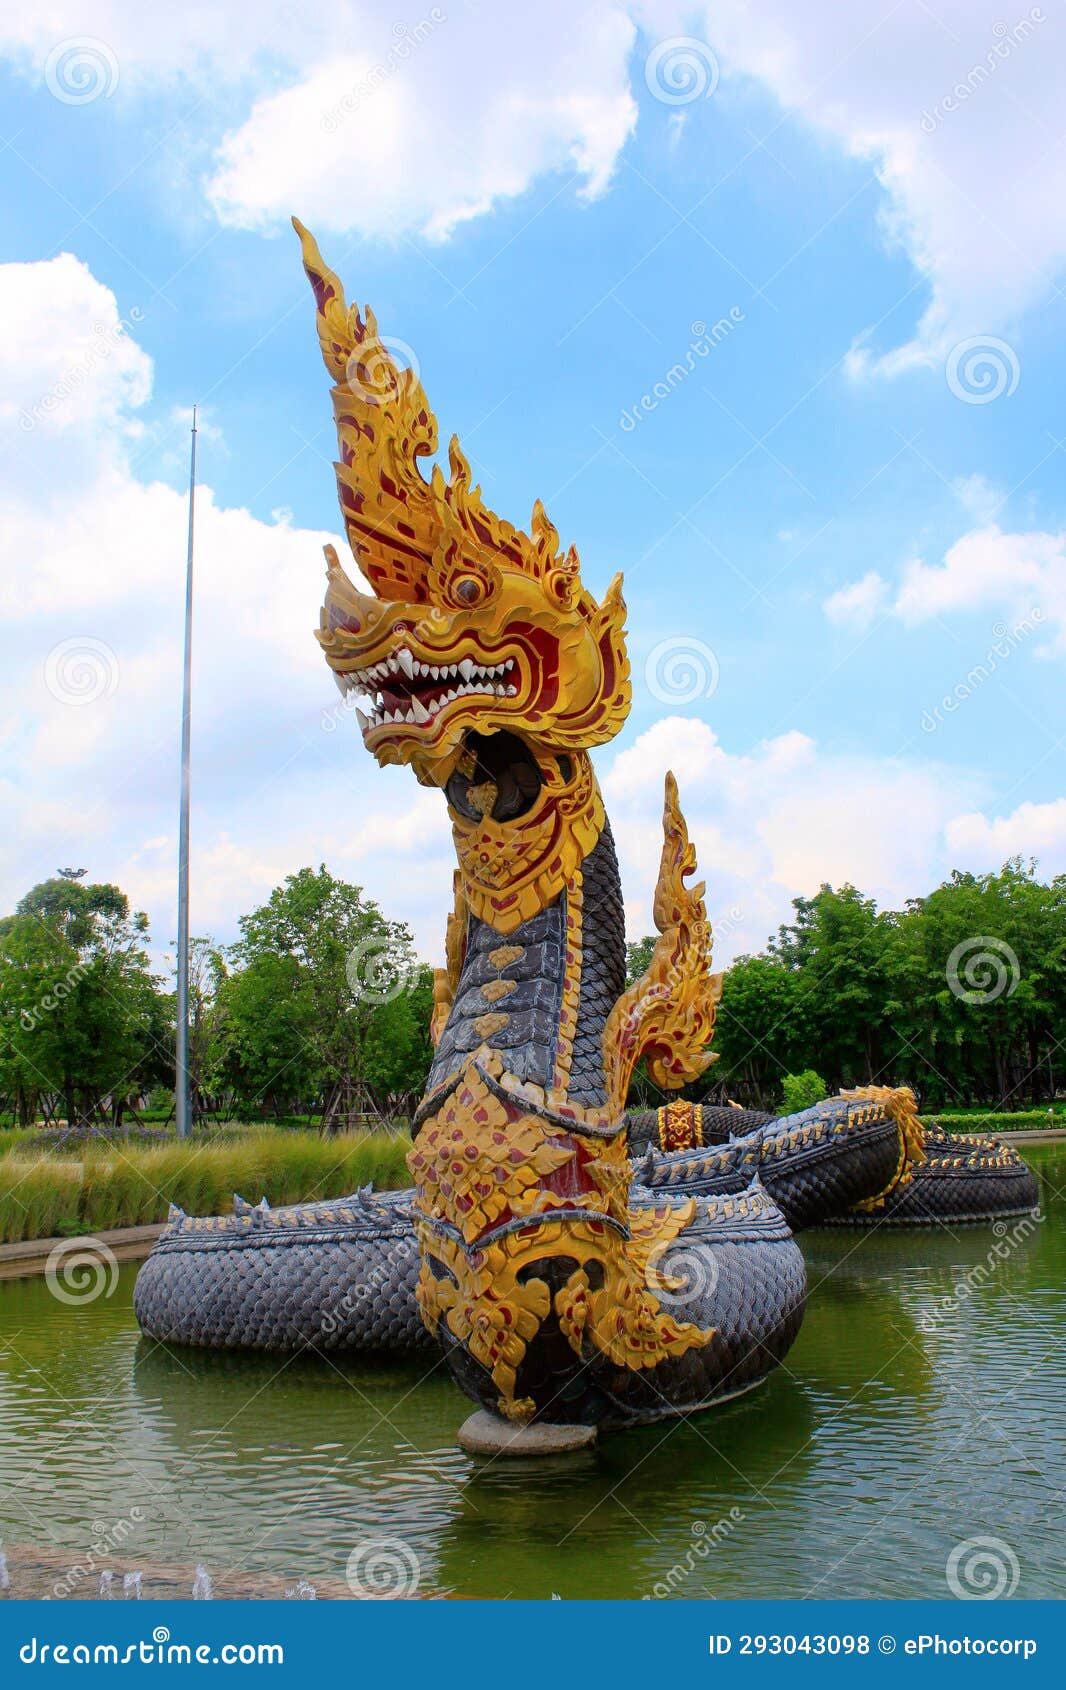 front view of the might dragon at buddhist temple at ban nong chaeng, phetchabun